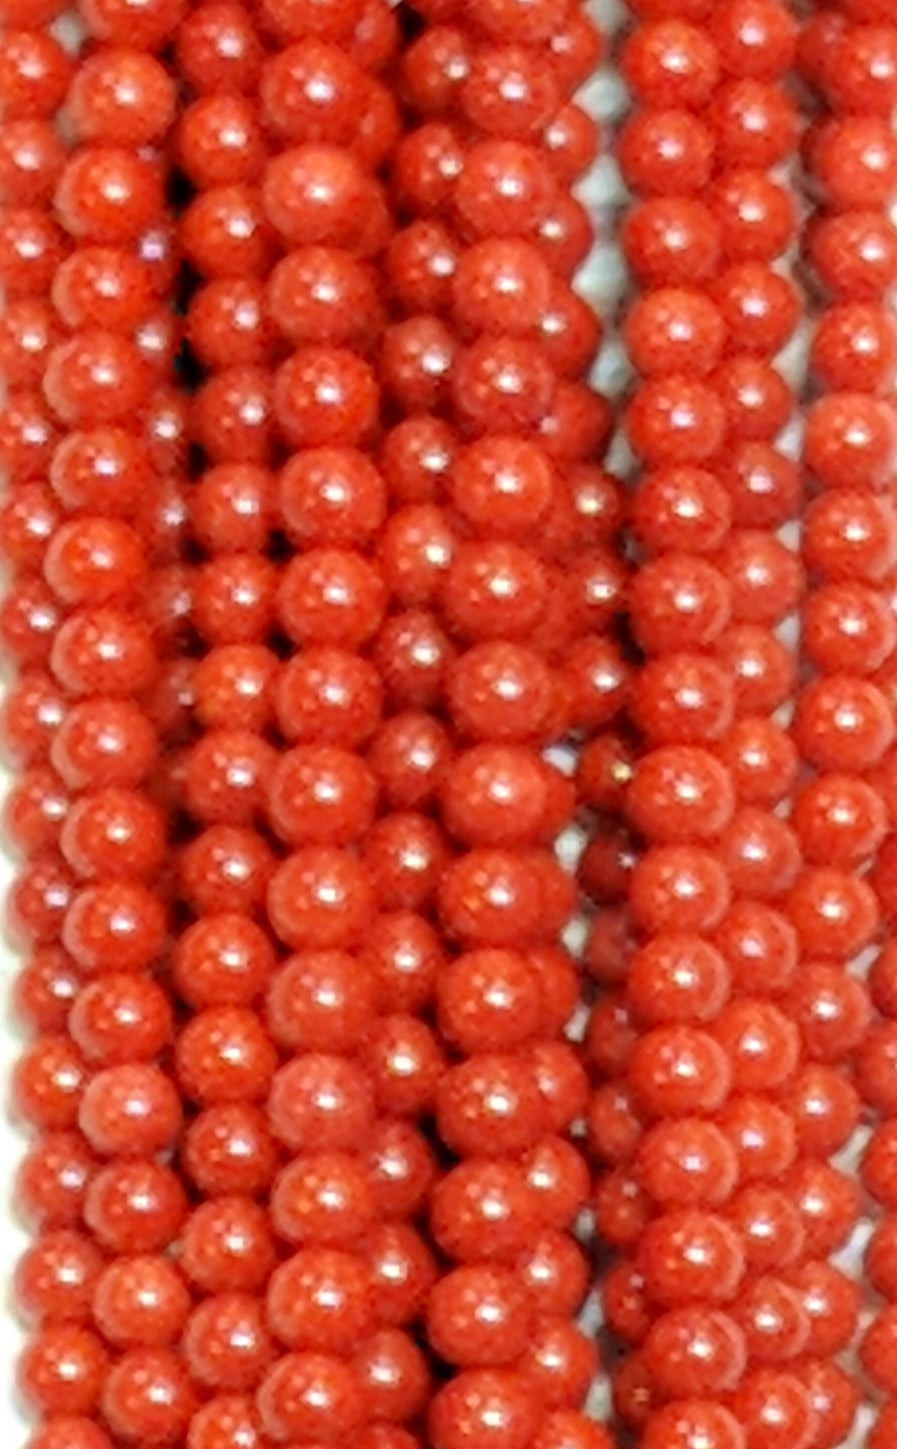 taiwan coral beads